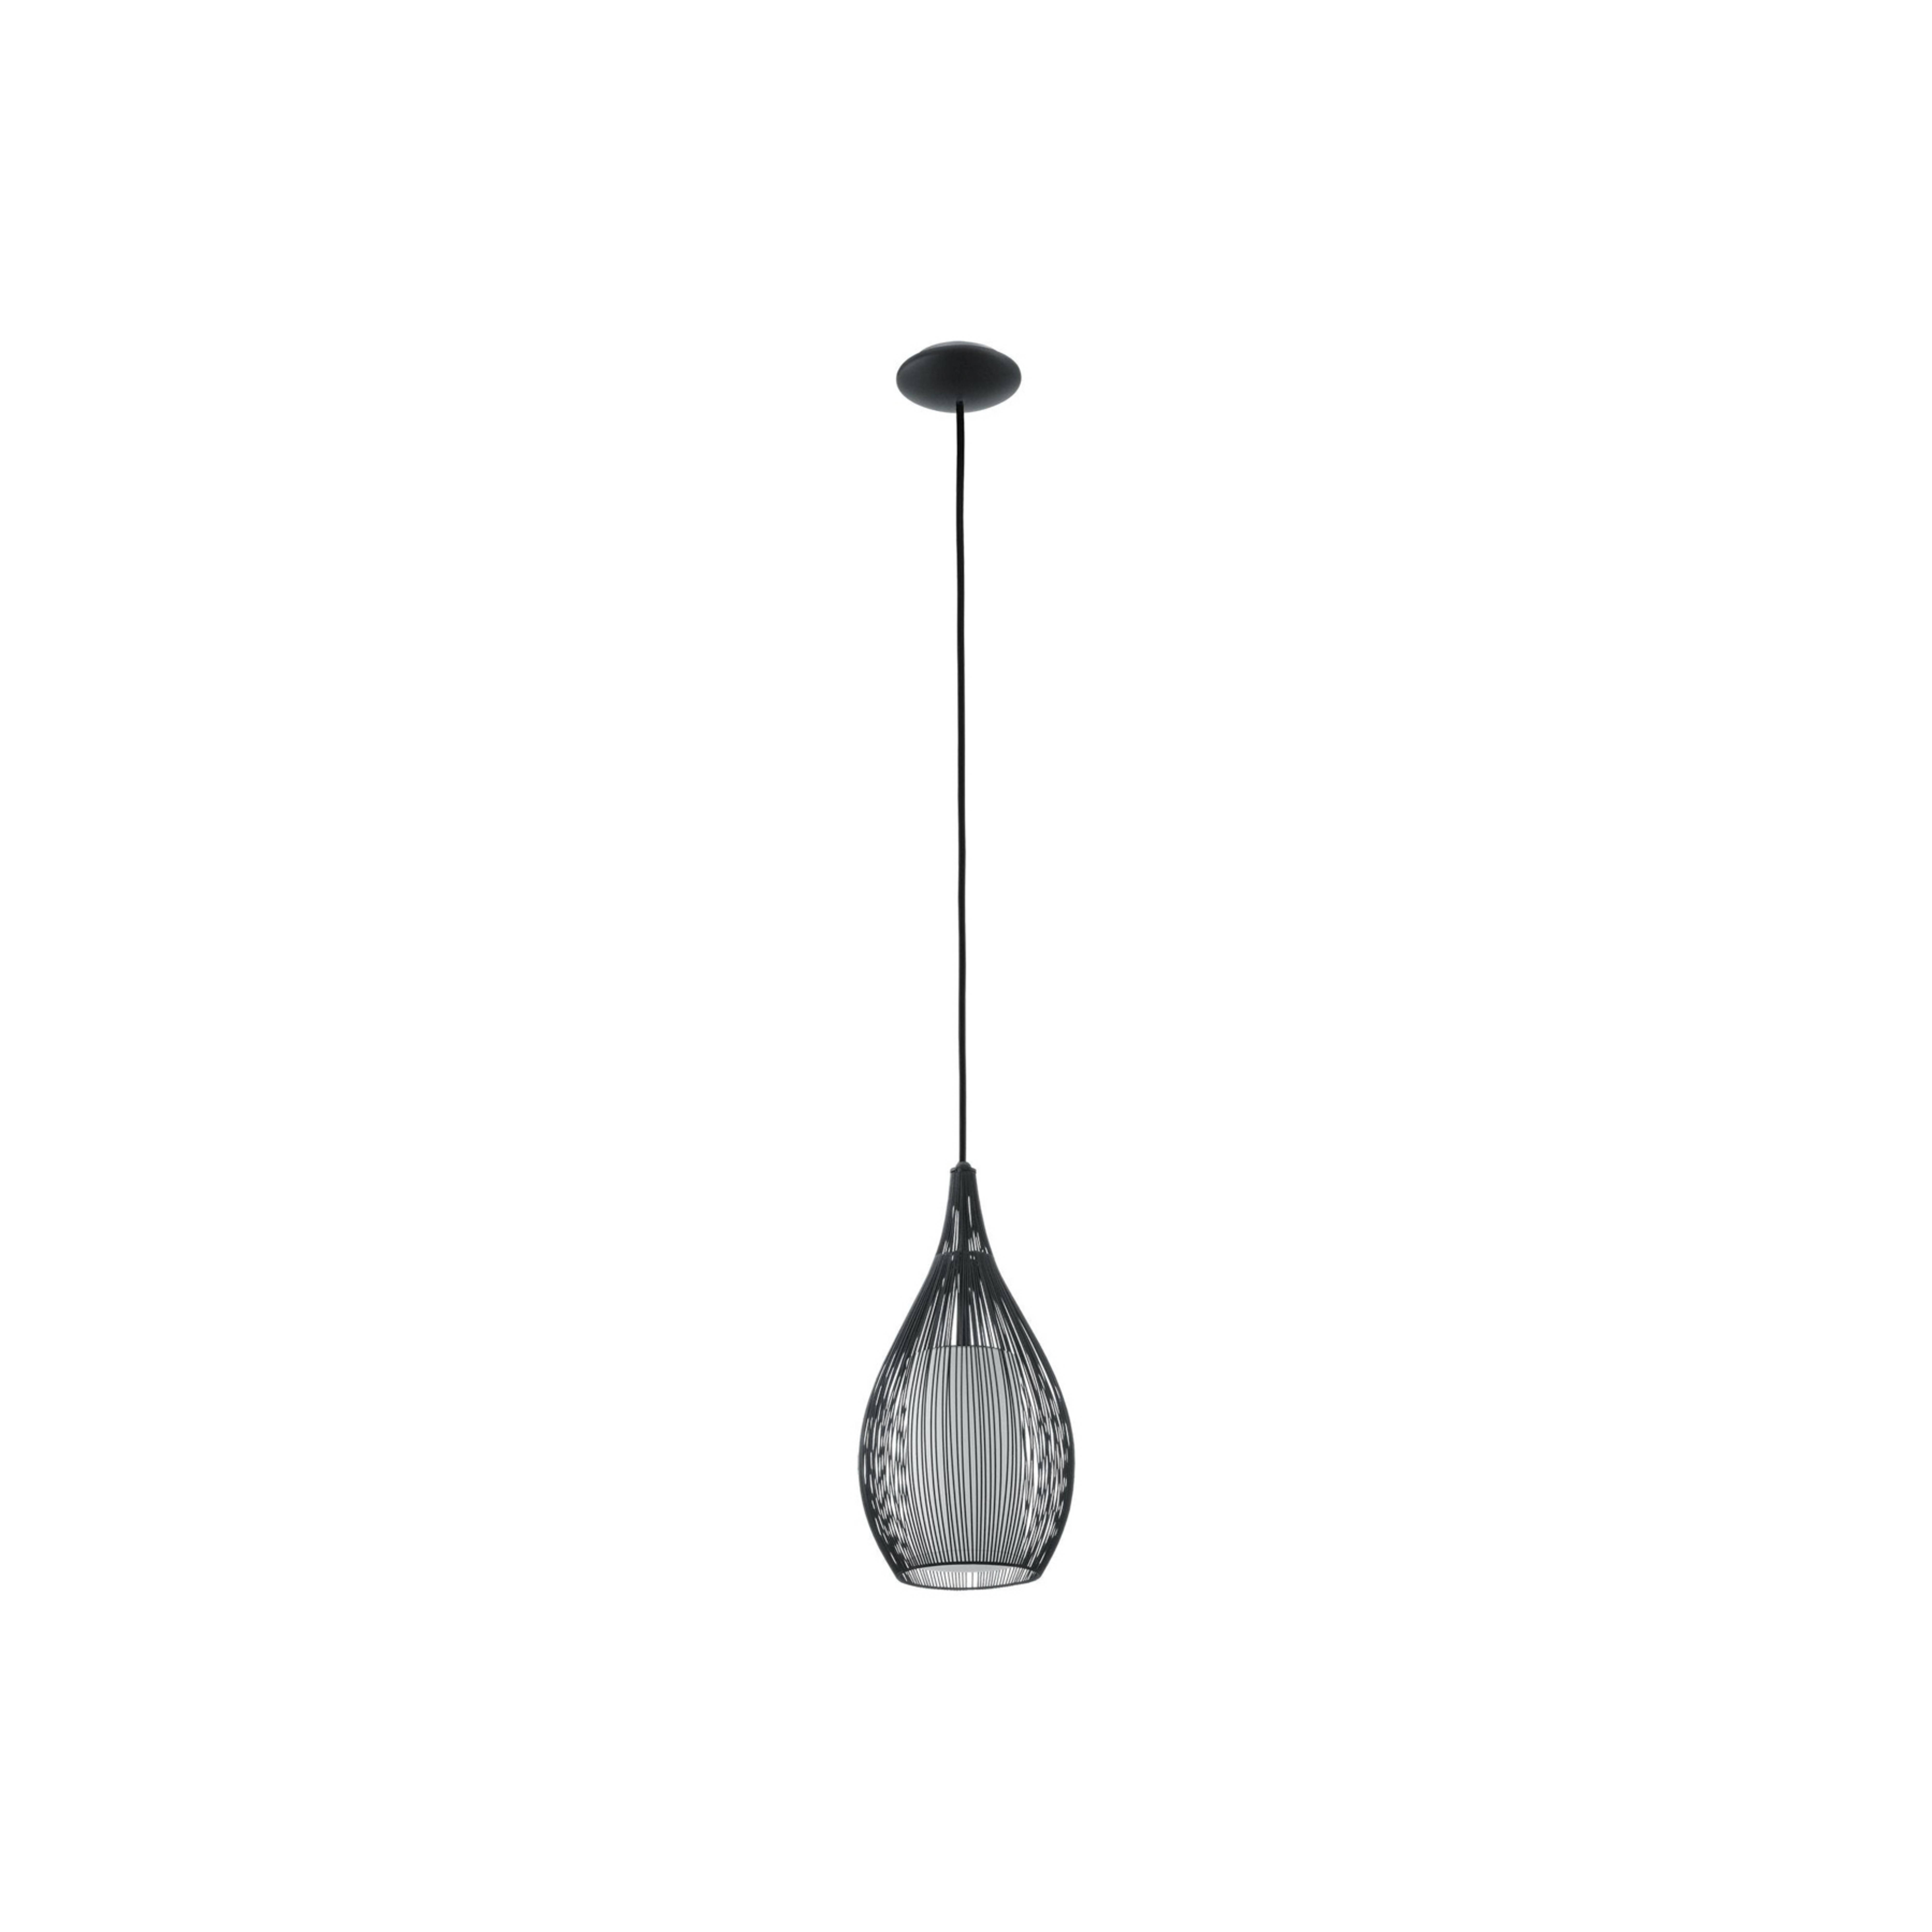 Beacon Solis pendant light, black, metal, glass, Ø 19 cm